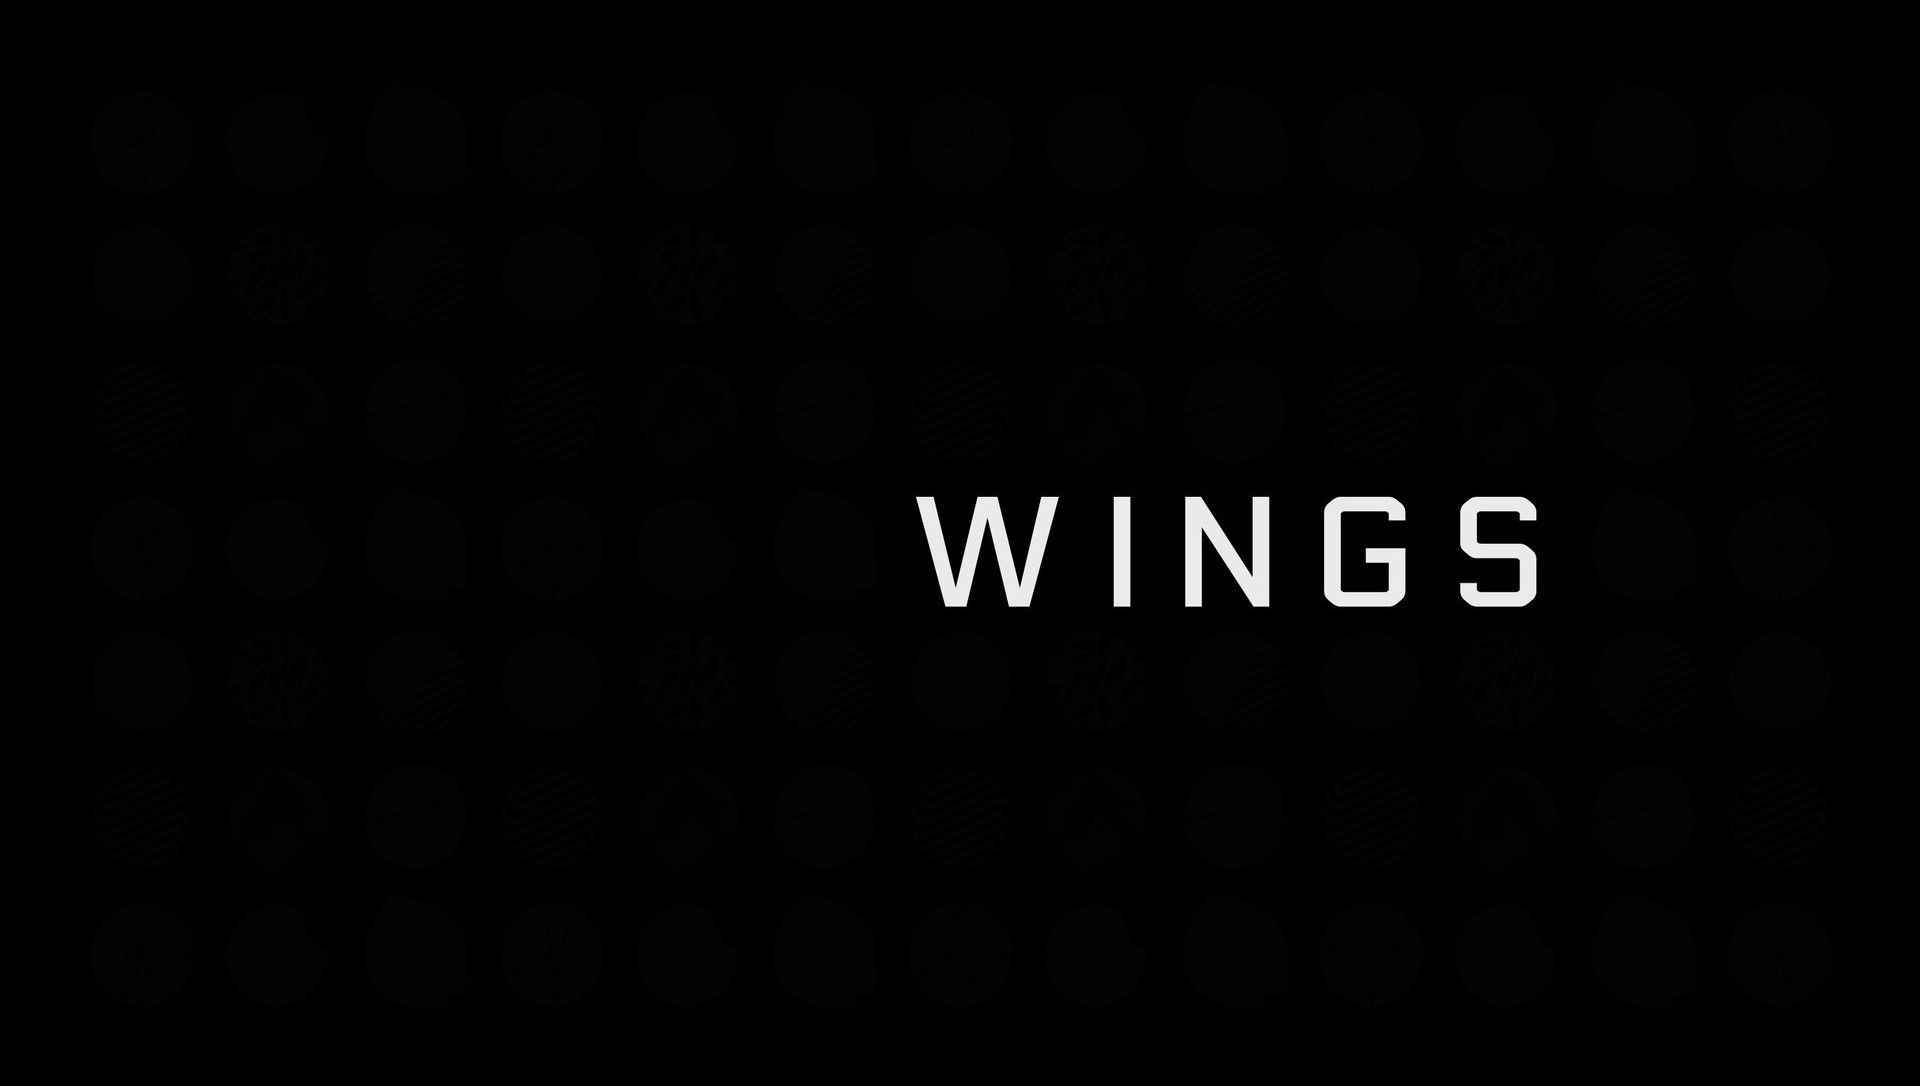 Wings logo design for a restaurant - Wings